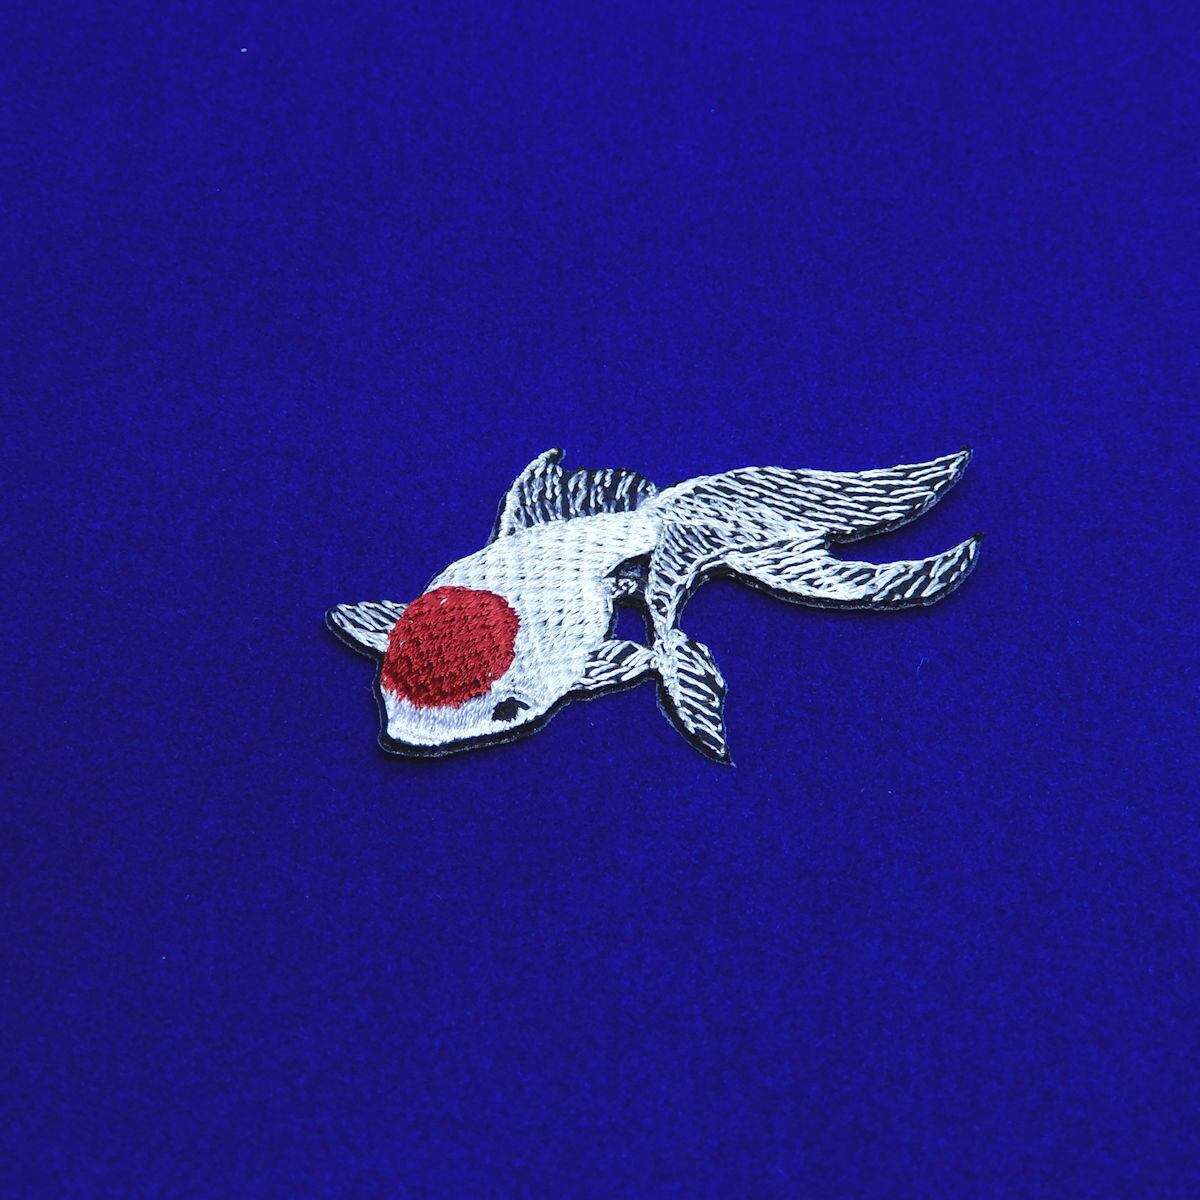 【VIVIENNE TAM】金魚刺繍パワーネットトップス